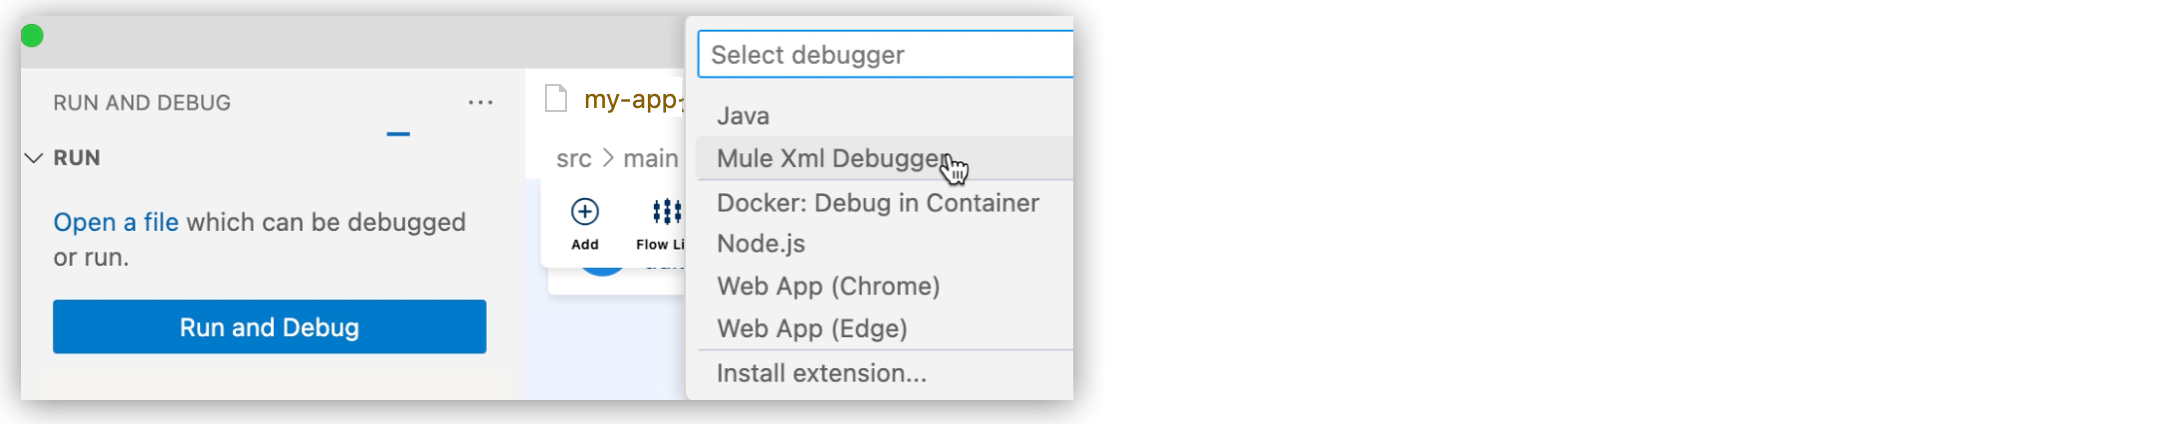 Run and Debug button and Mule XML Debugger menu item